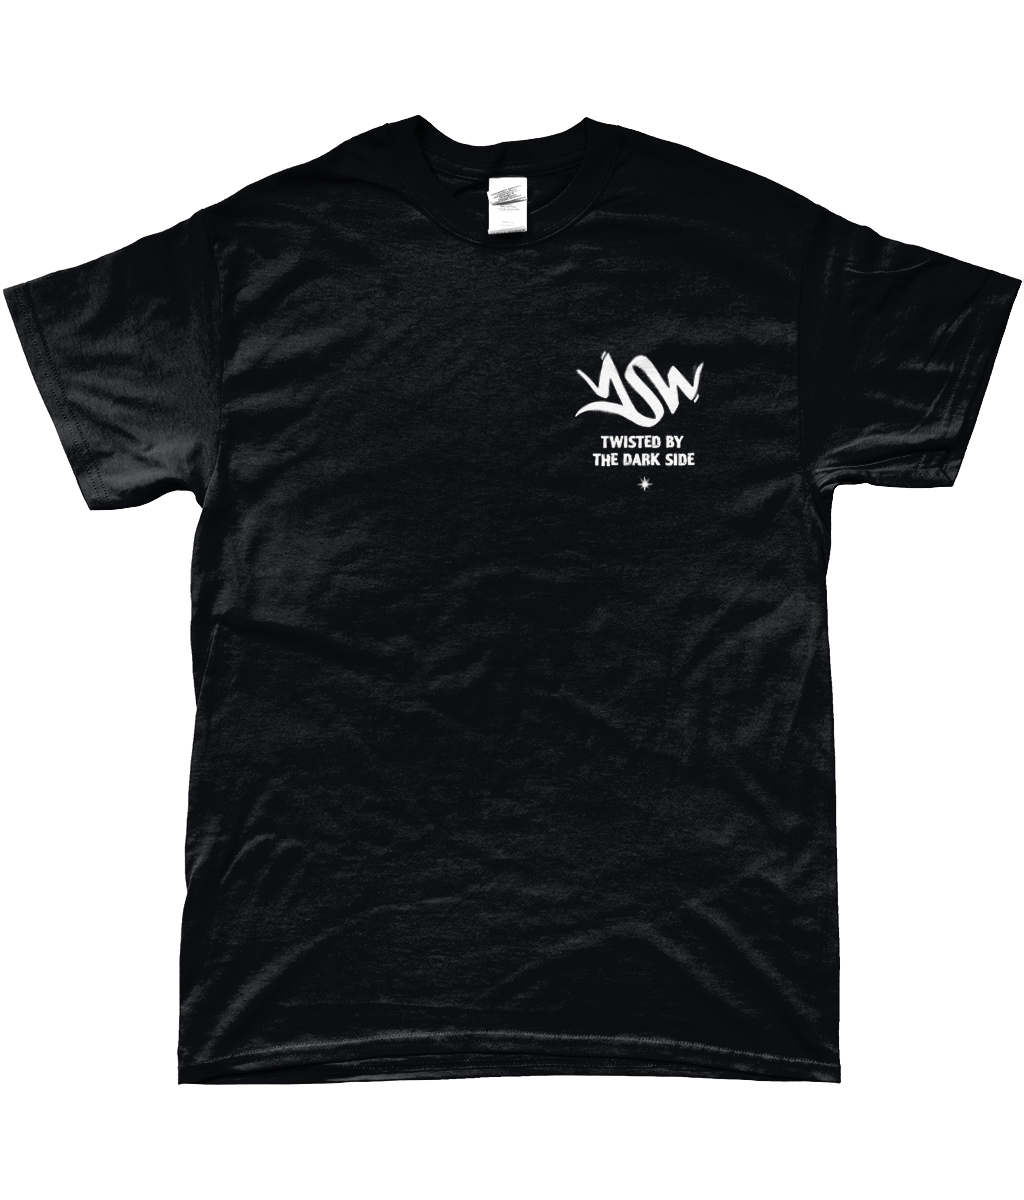 YSW Pocket T-Shirt